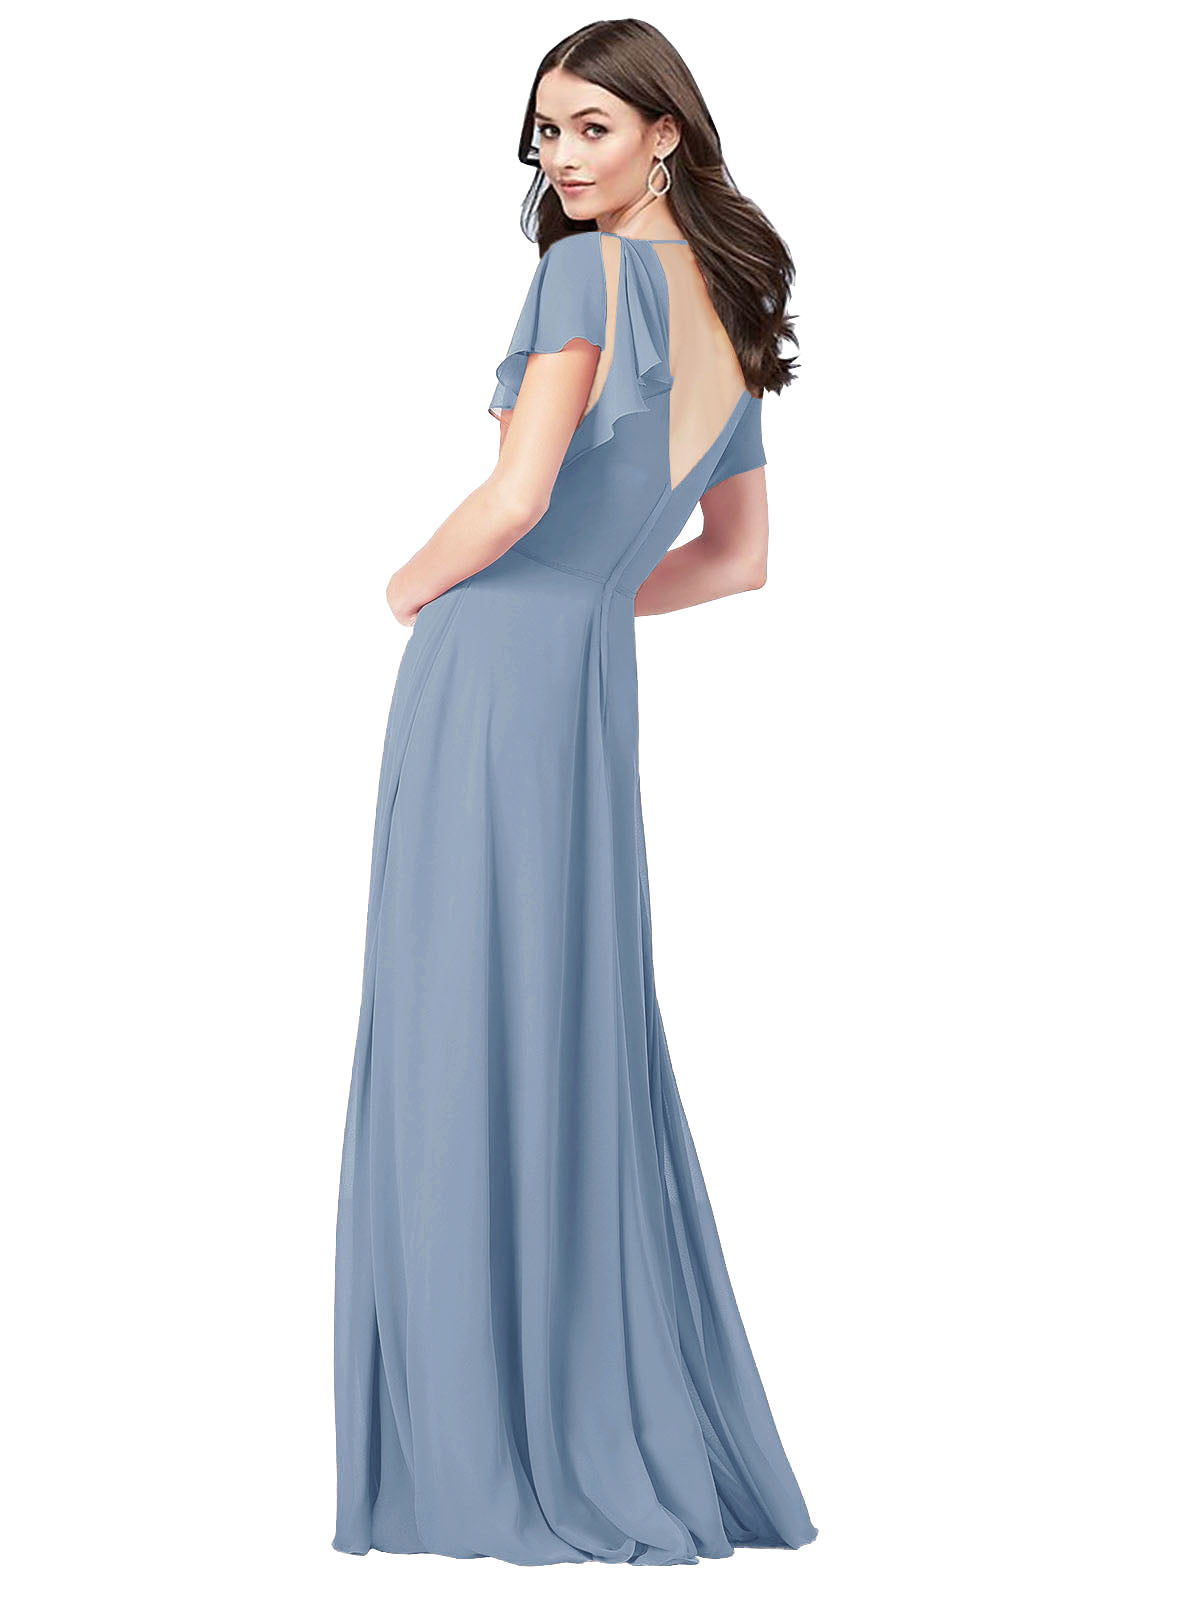 RightBrides Marisol Dusty Blue A-Line V-Neck Cap Sleeves Long Bridesmaid Dress